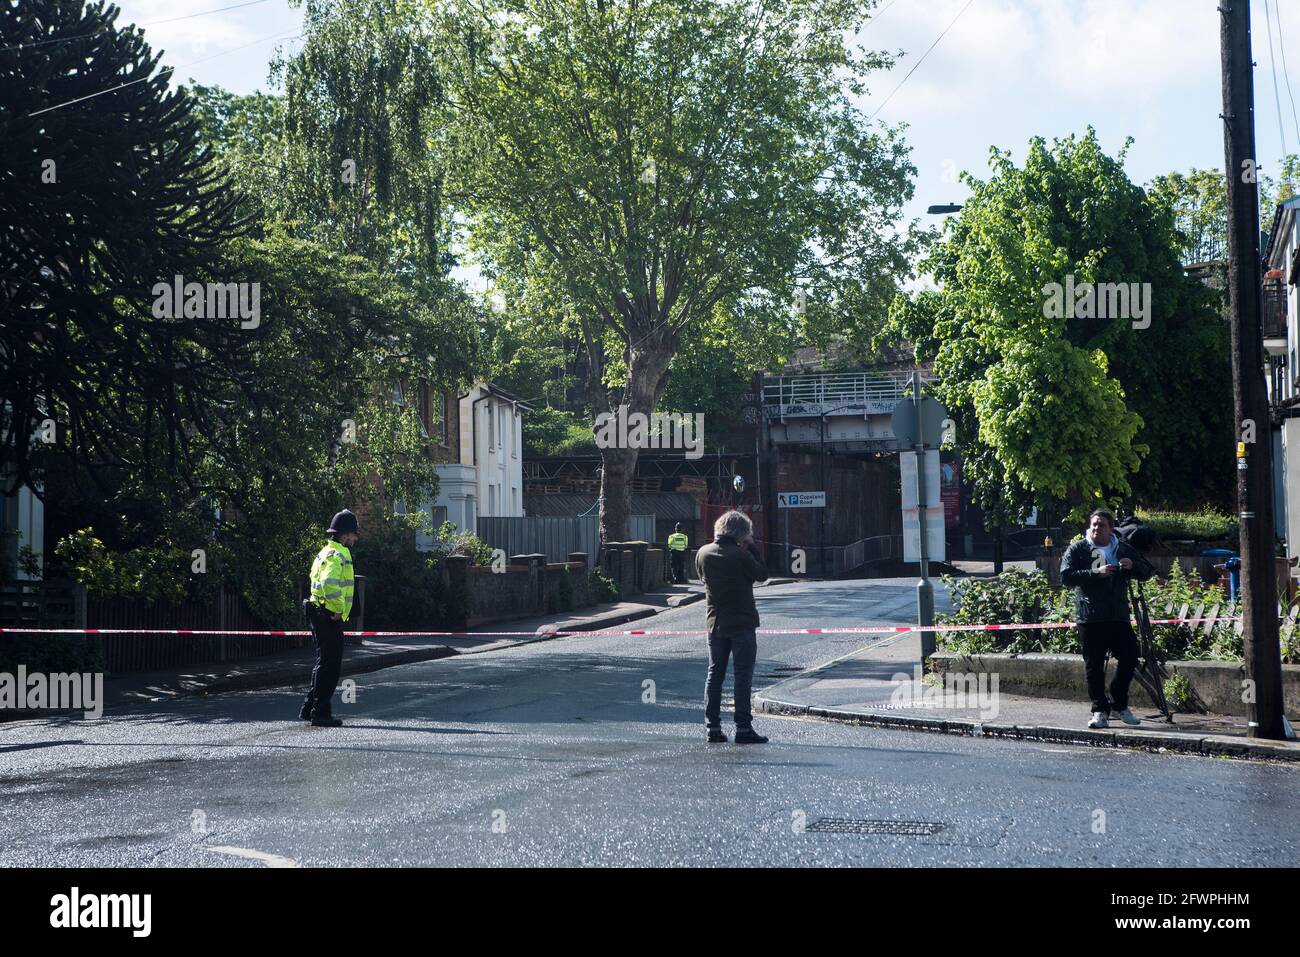 Scene of a shooting of Black Lives Matter activist Sasha Johnson, Consort road, Peckham, South London, UK 23rd May 2021 Stock Photo